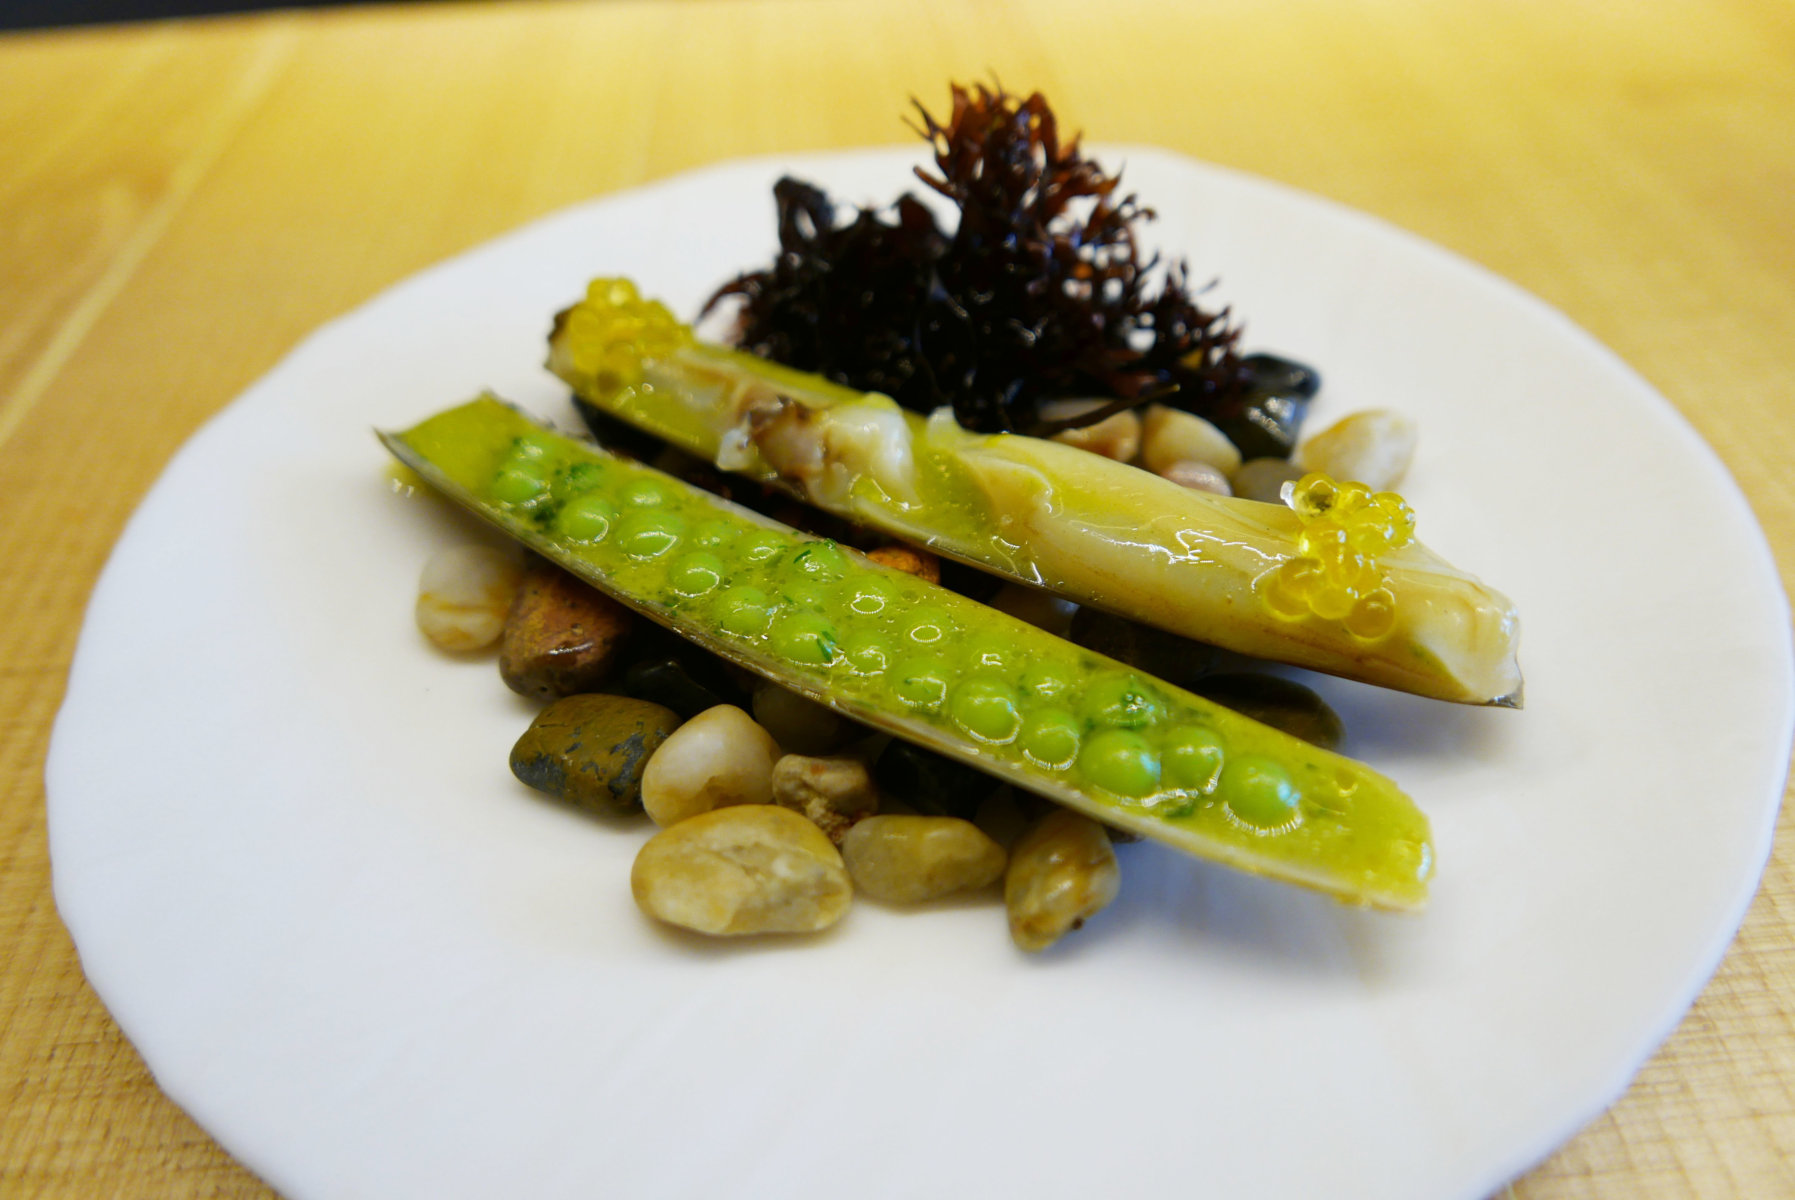 Razor clams with peas in "salsa verde"